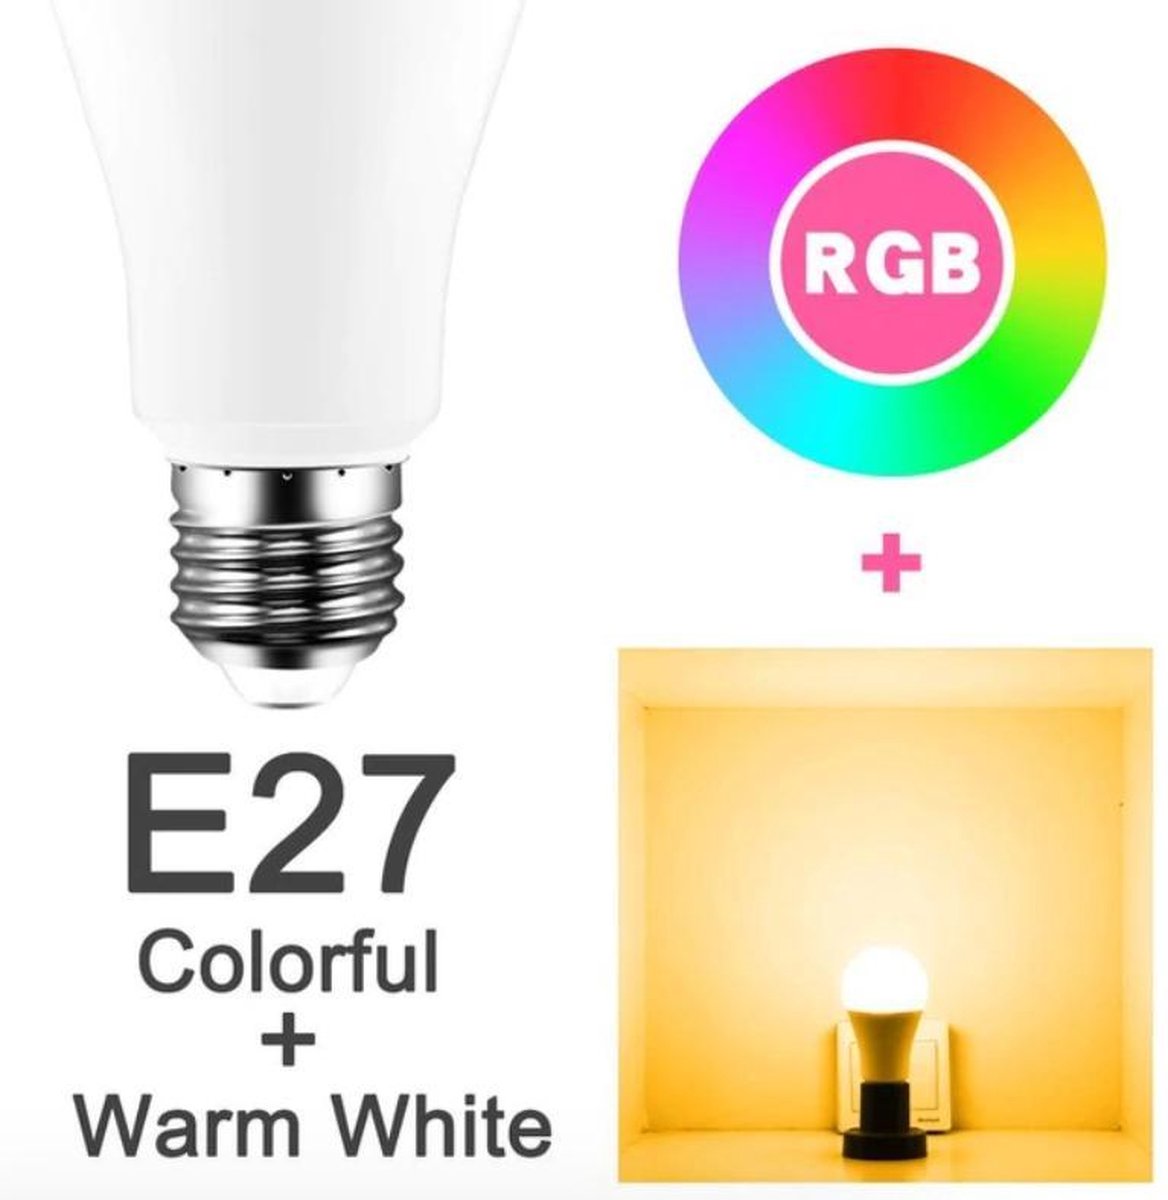 auditie limiet kat RGB Led lamp E27 bestuurbaar via telefoon met bluetooth en Warm licht |  bol.com